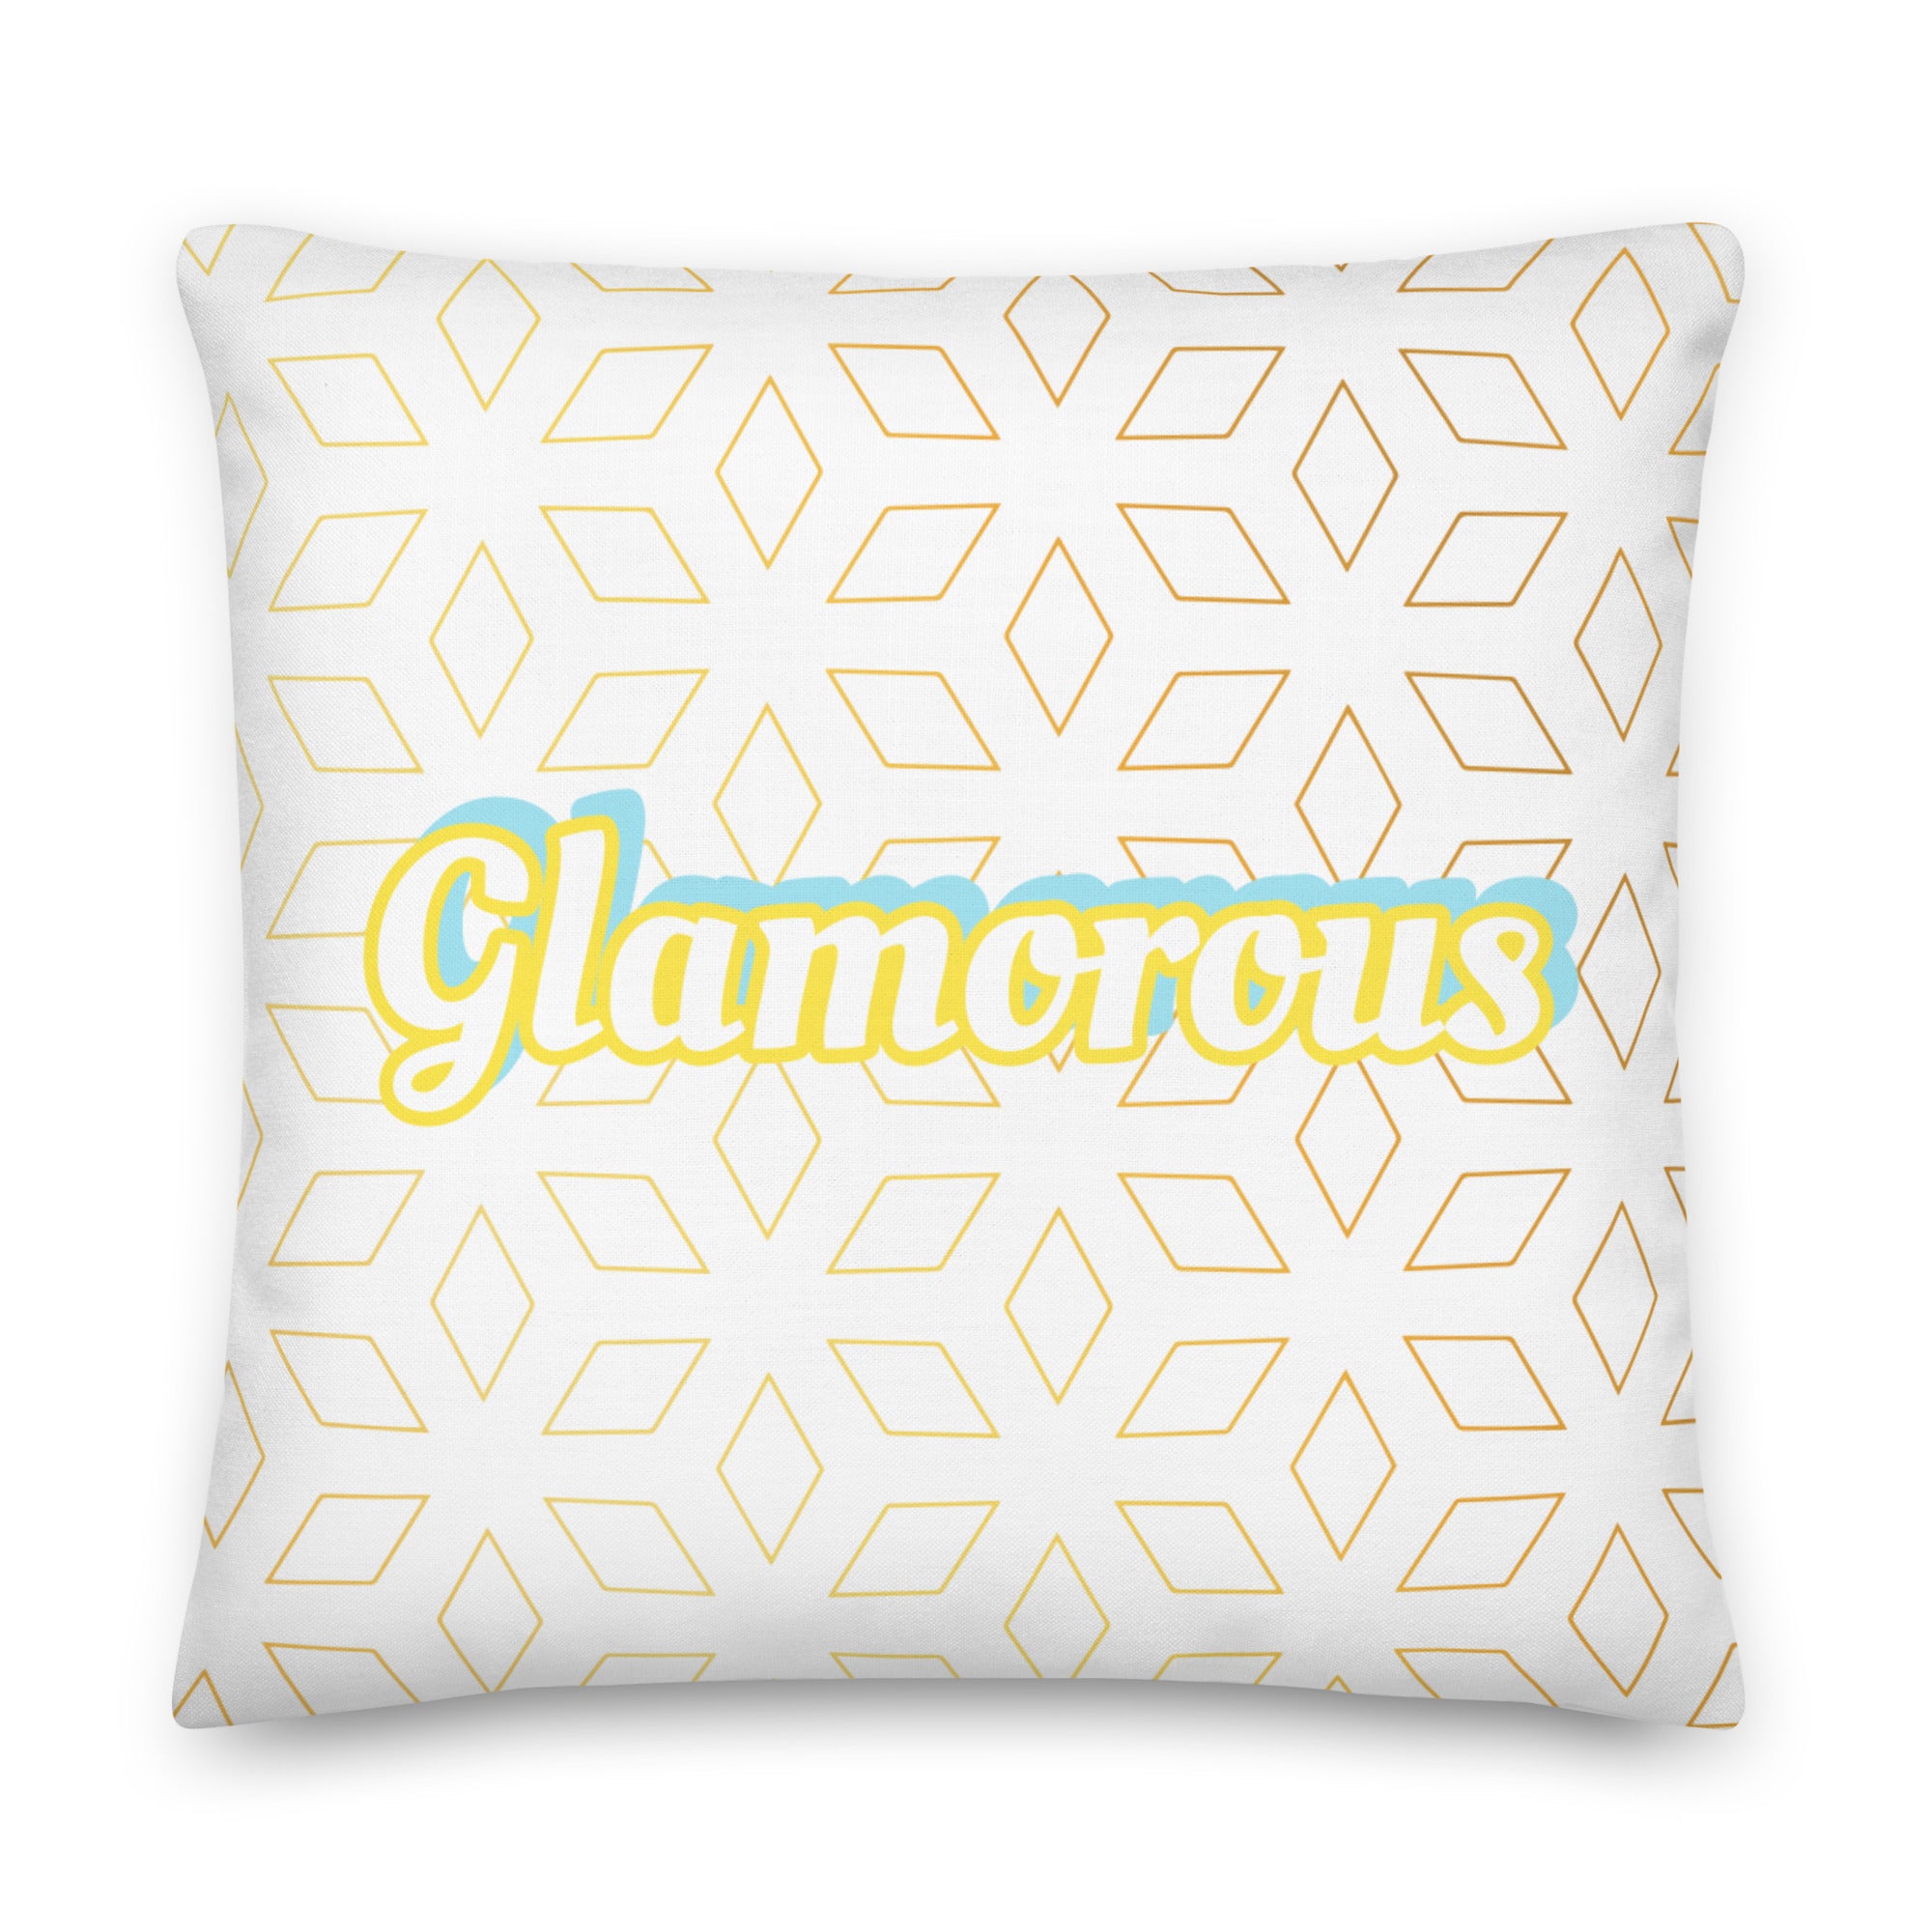 Glamorous Pillow